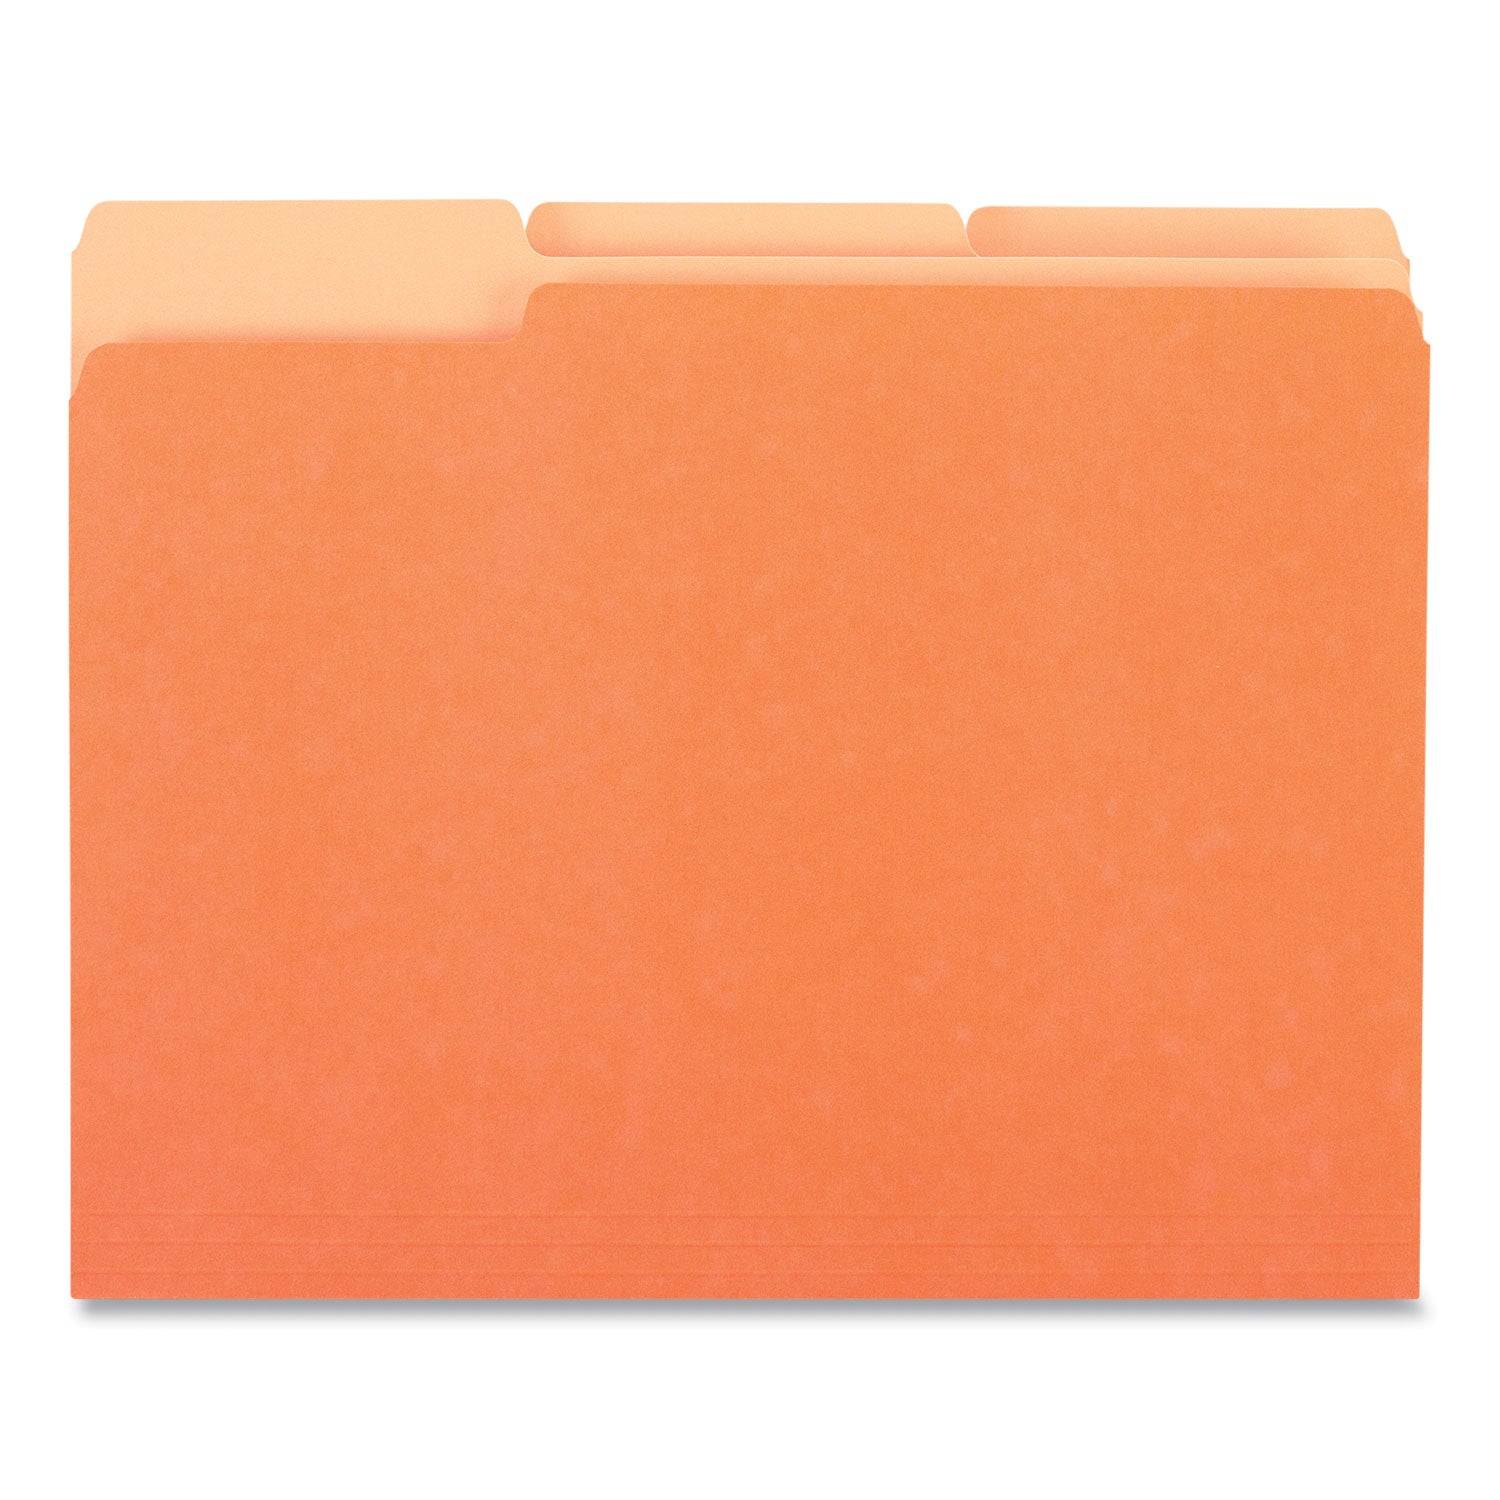 Deluxe Colored Top Tab File Folders, 1/3-Cut Tabs: Assorted, Letter Size, Orange/Light Orange, 100/Box - 